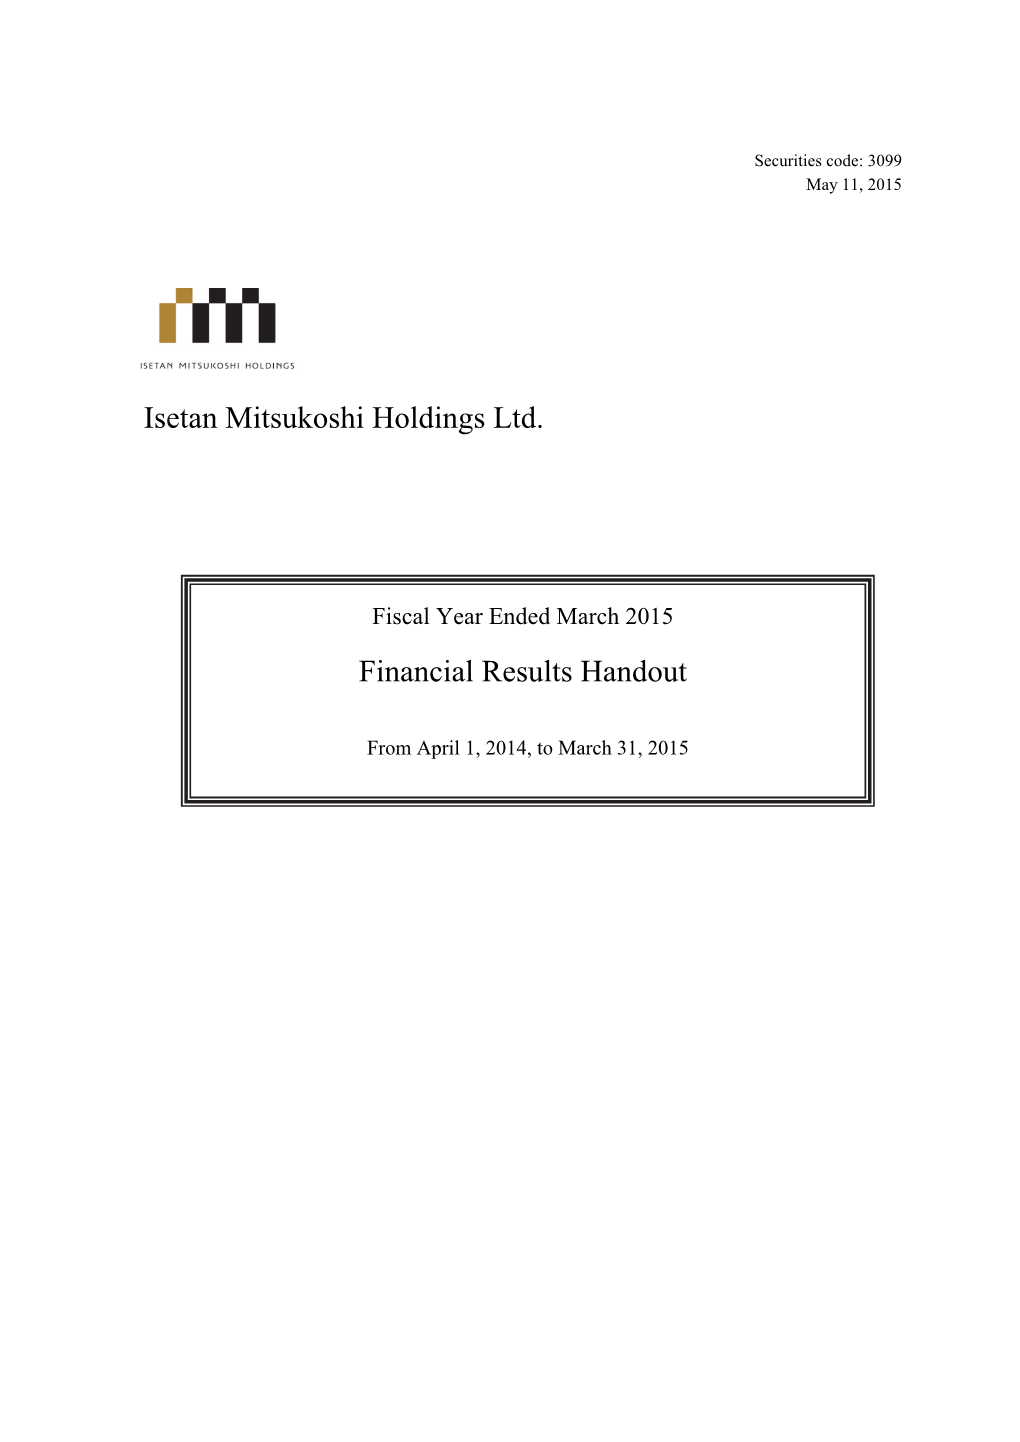 Isetan Mitsukoshi Holdings Ltd. Financial Results Handout